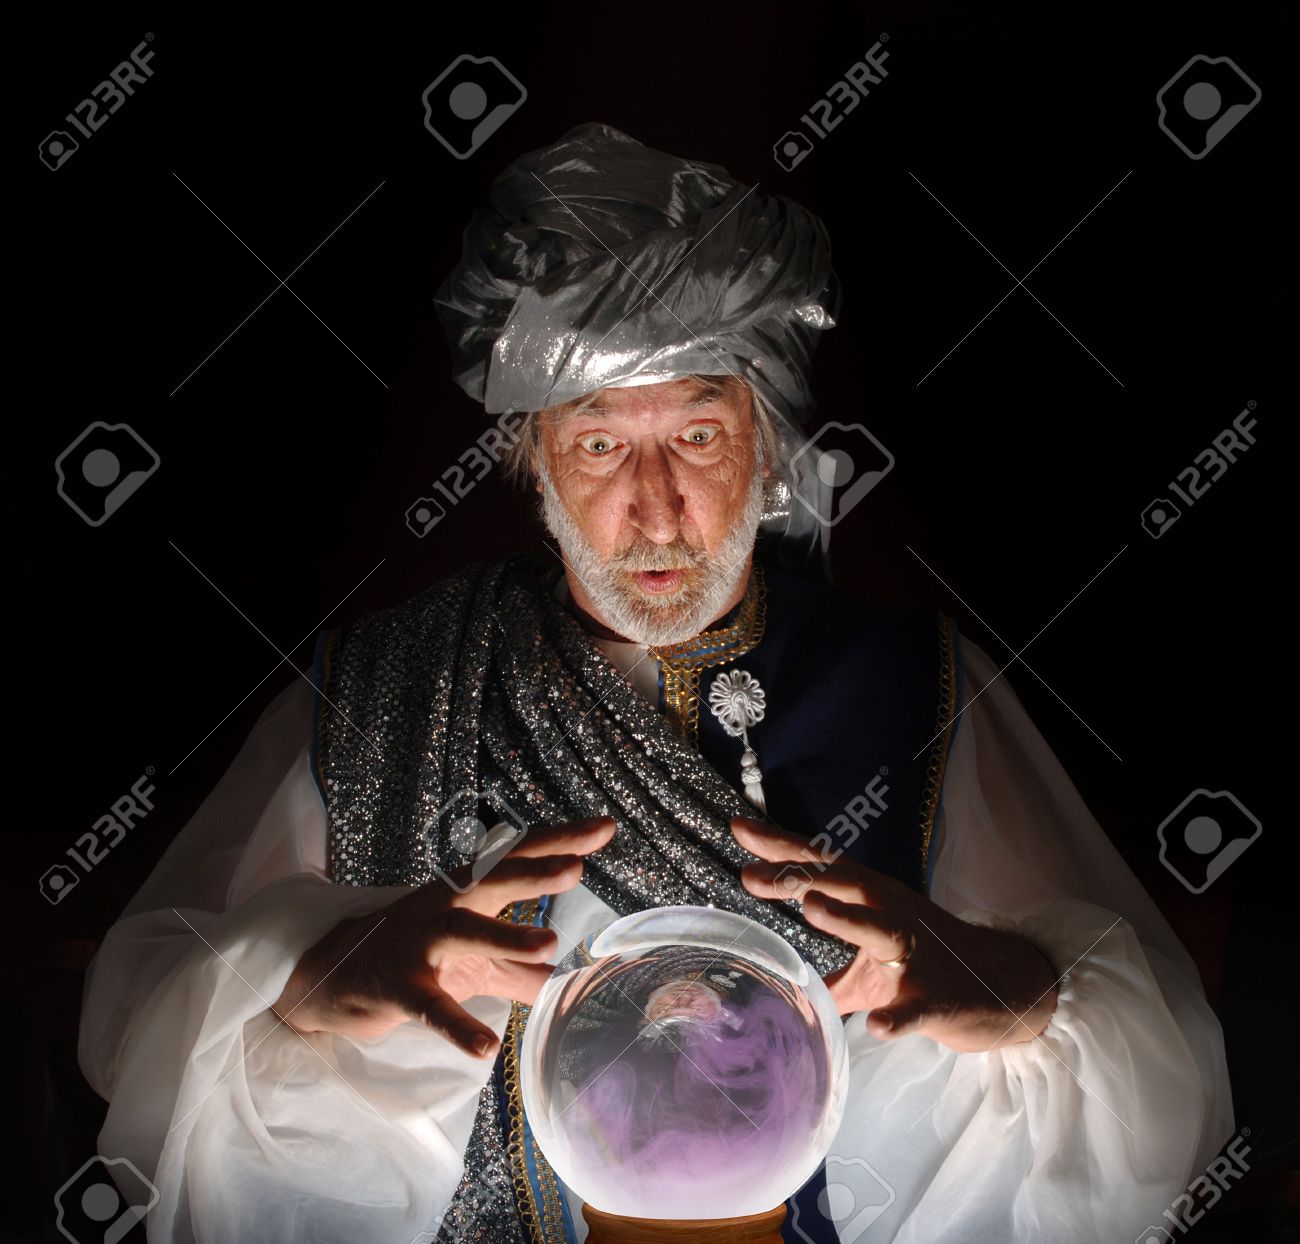 9519798-swami-gazing-into-a-crystal-ball.jpg